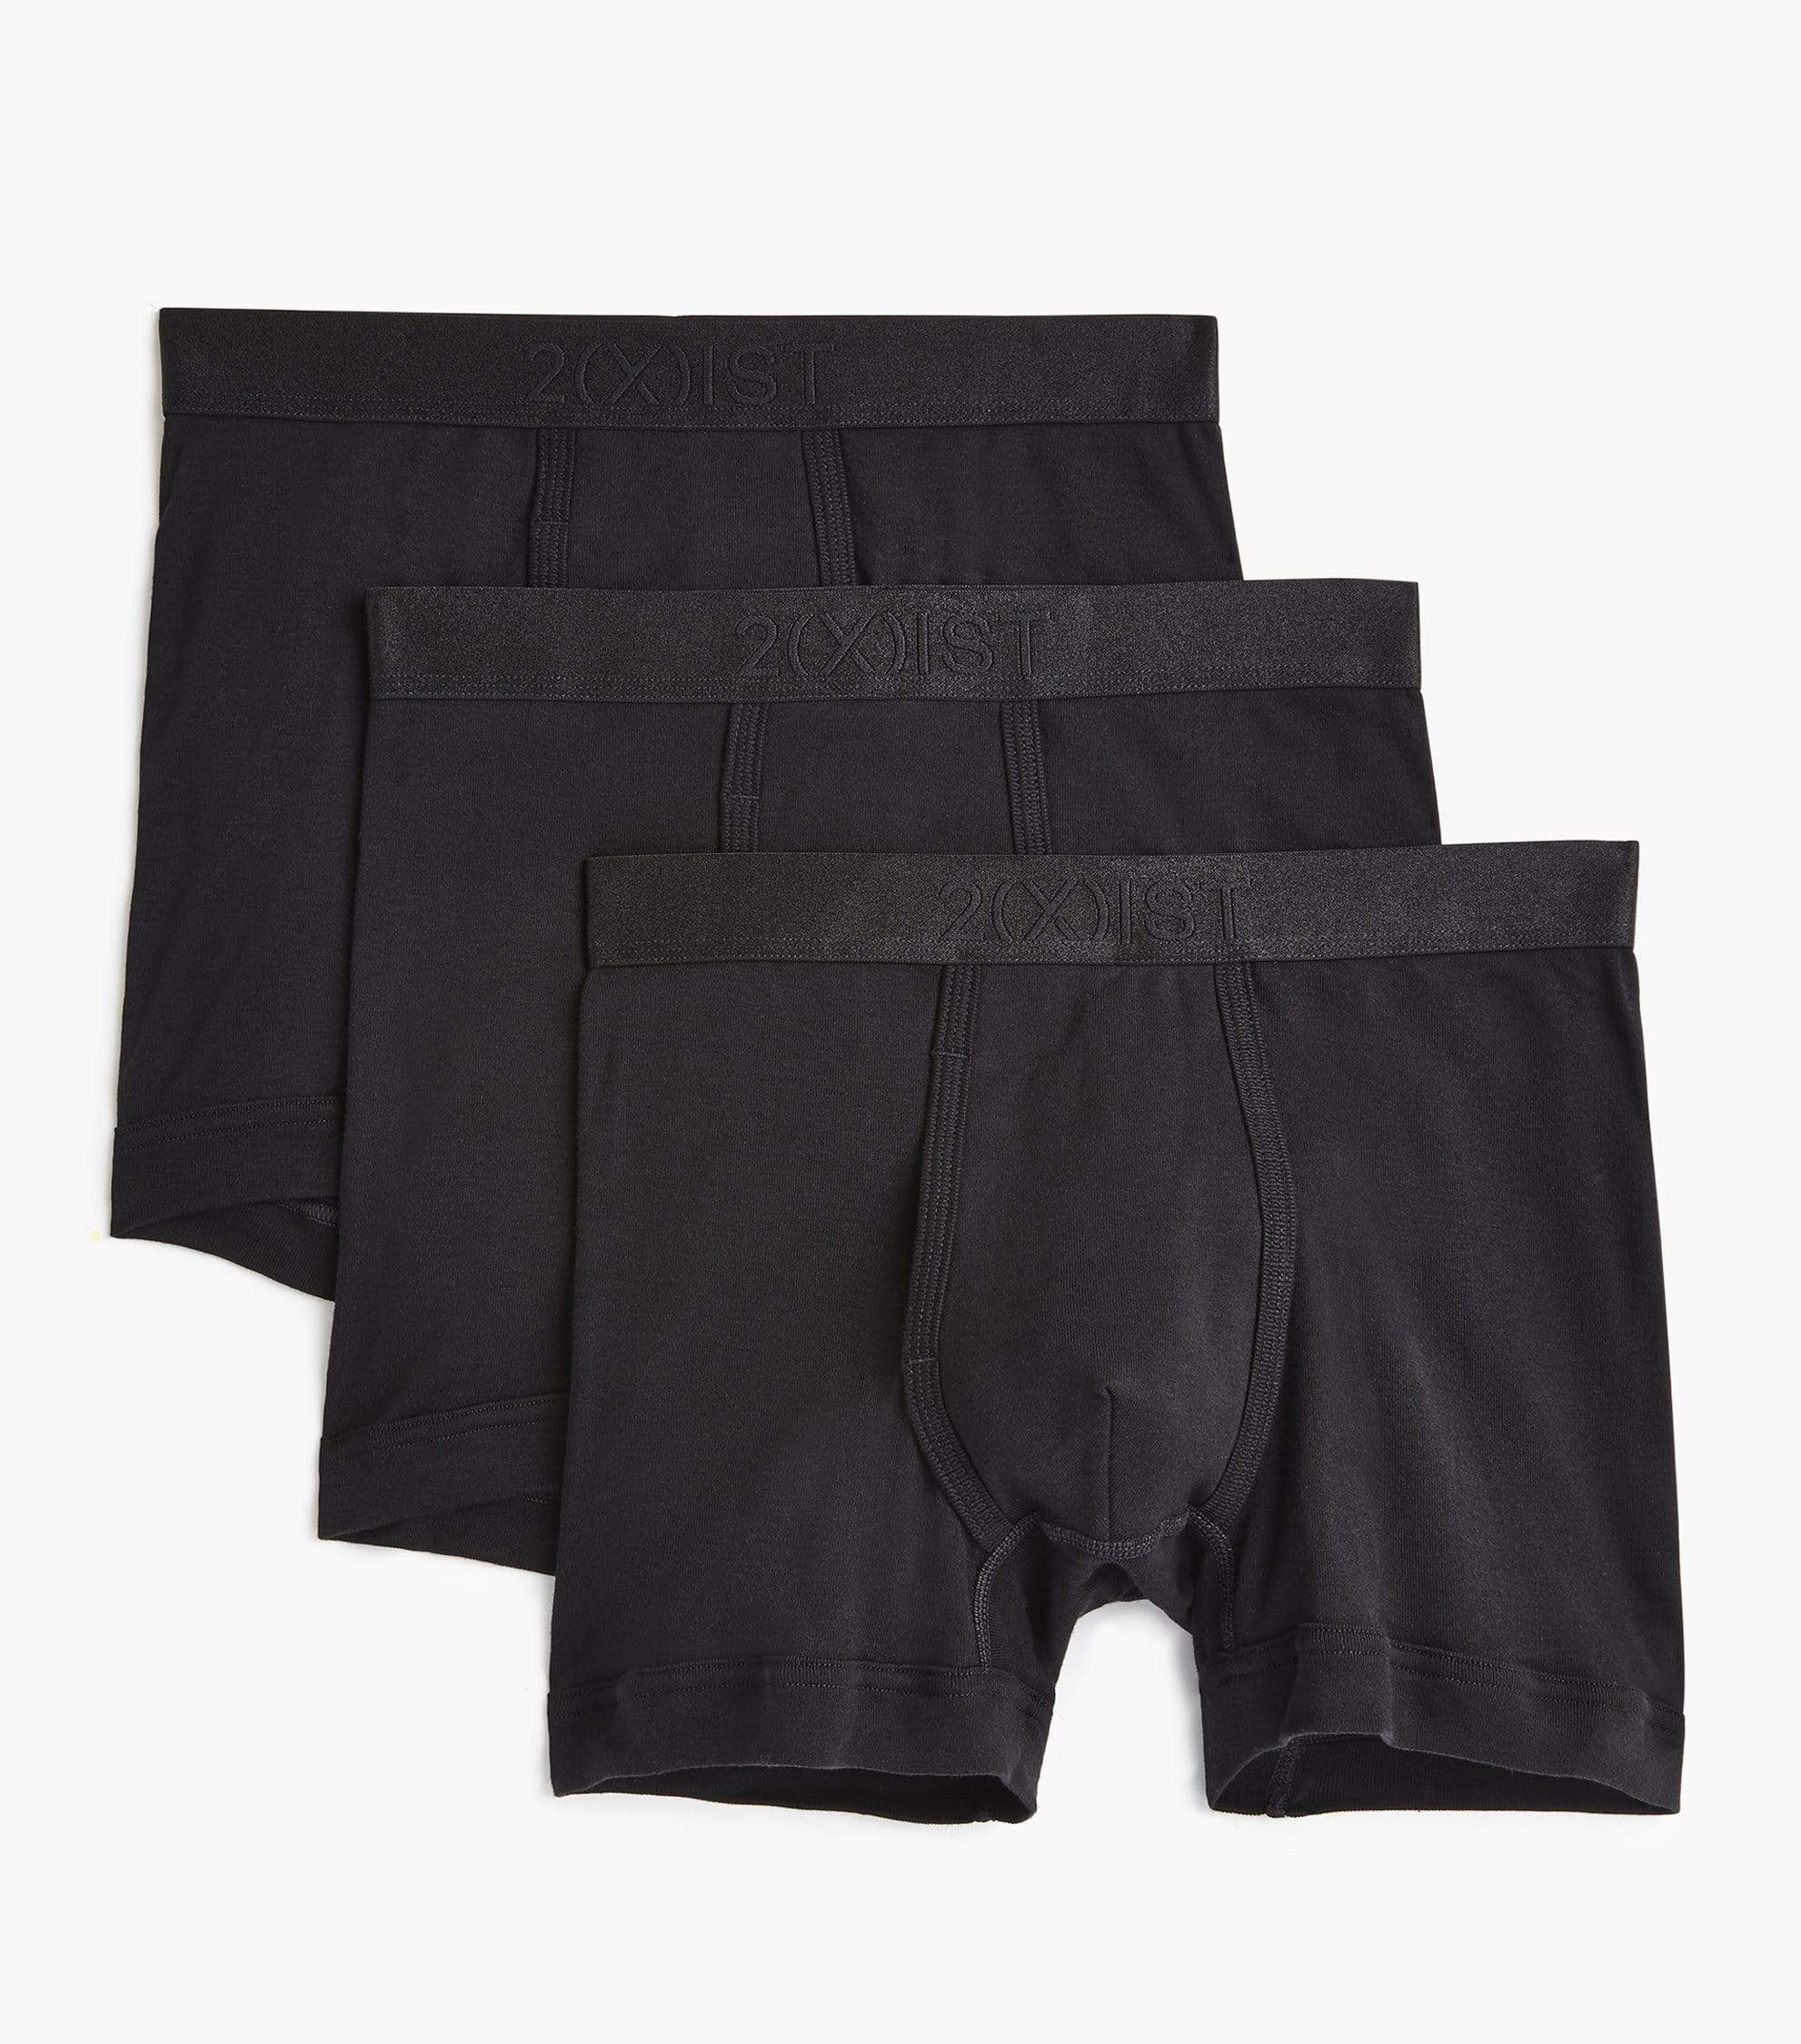 2 pack of men's boxer shorts in the Skiny cassette pattern 086487